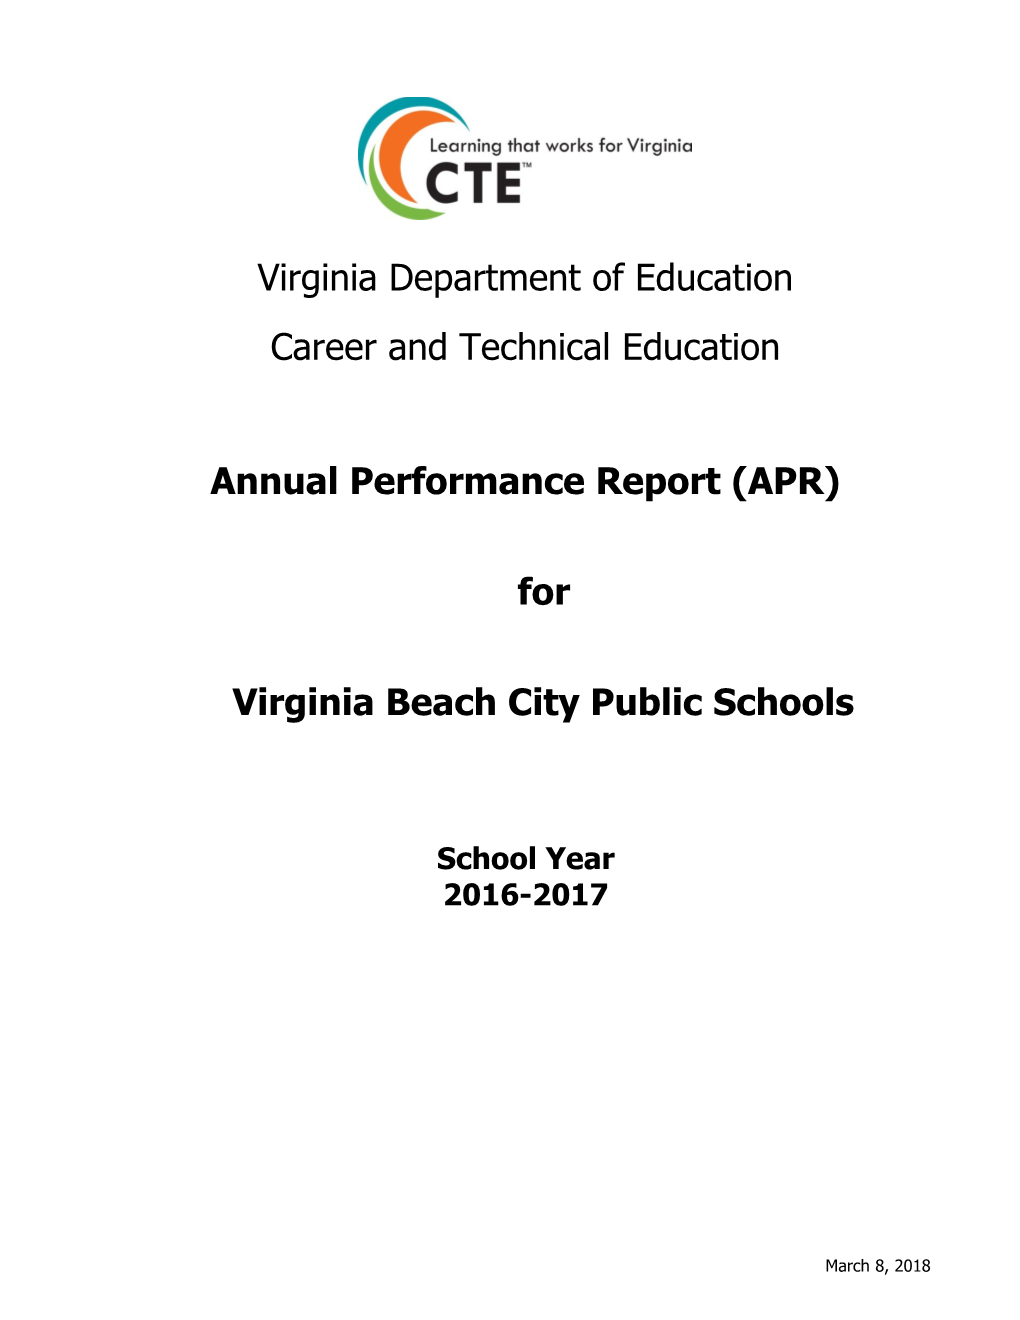 2016-2017 APR for School Division #128